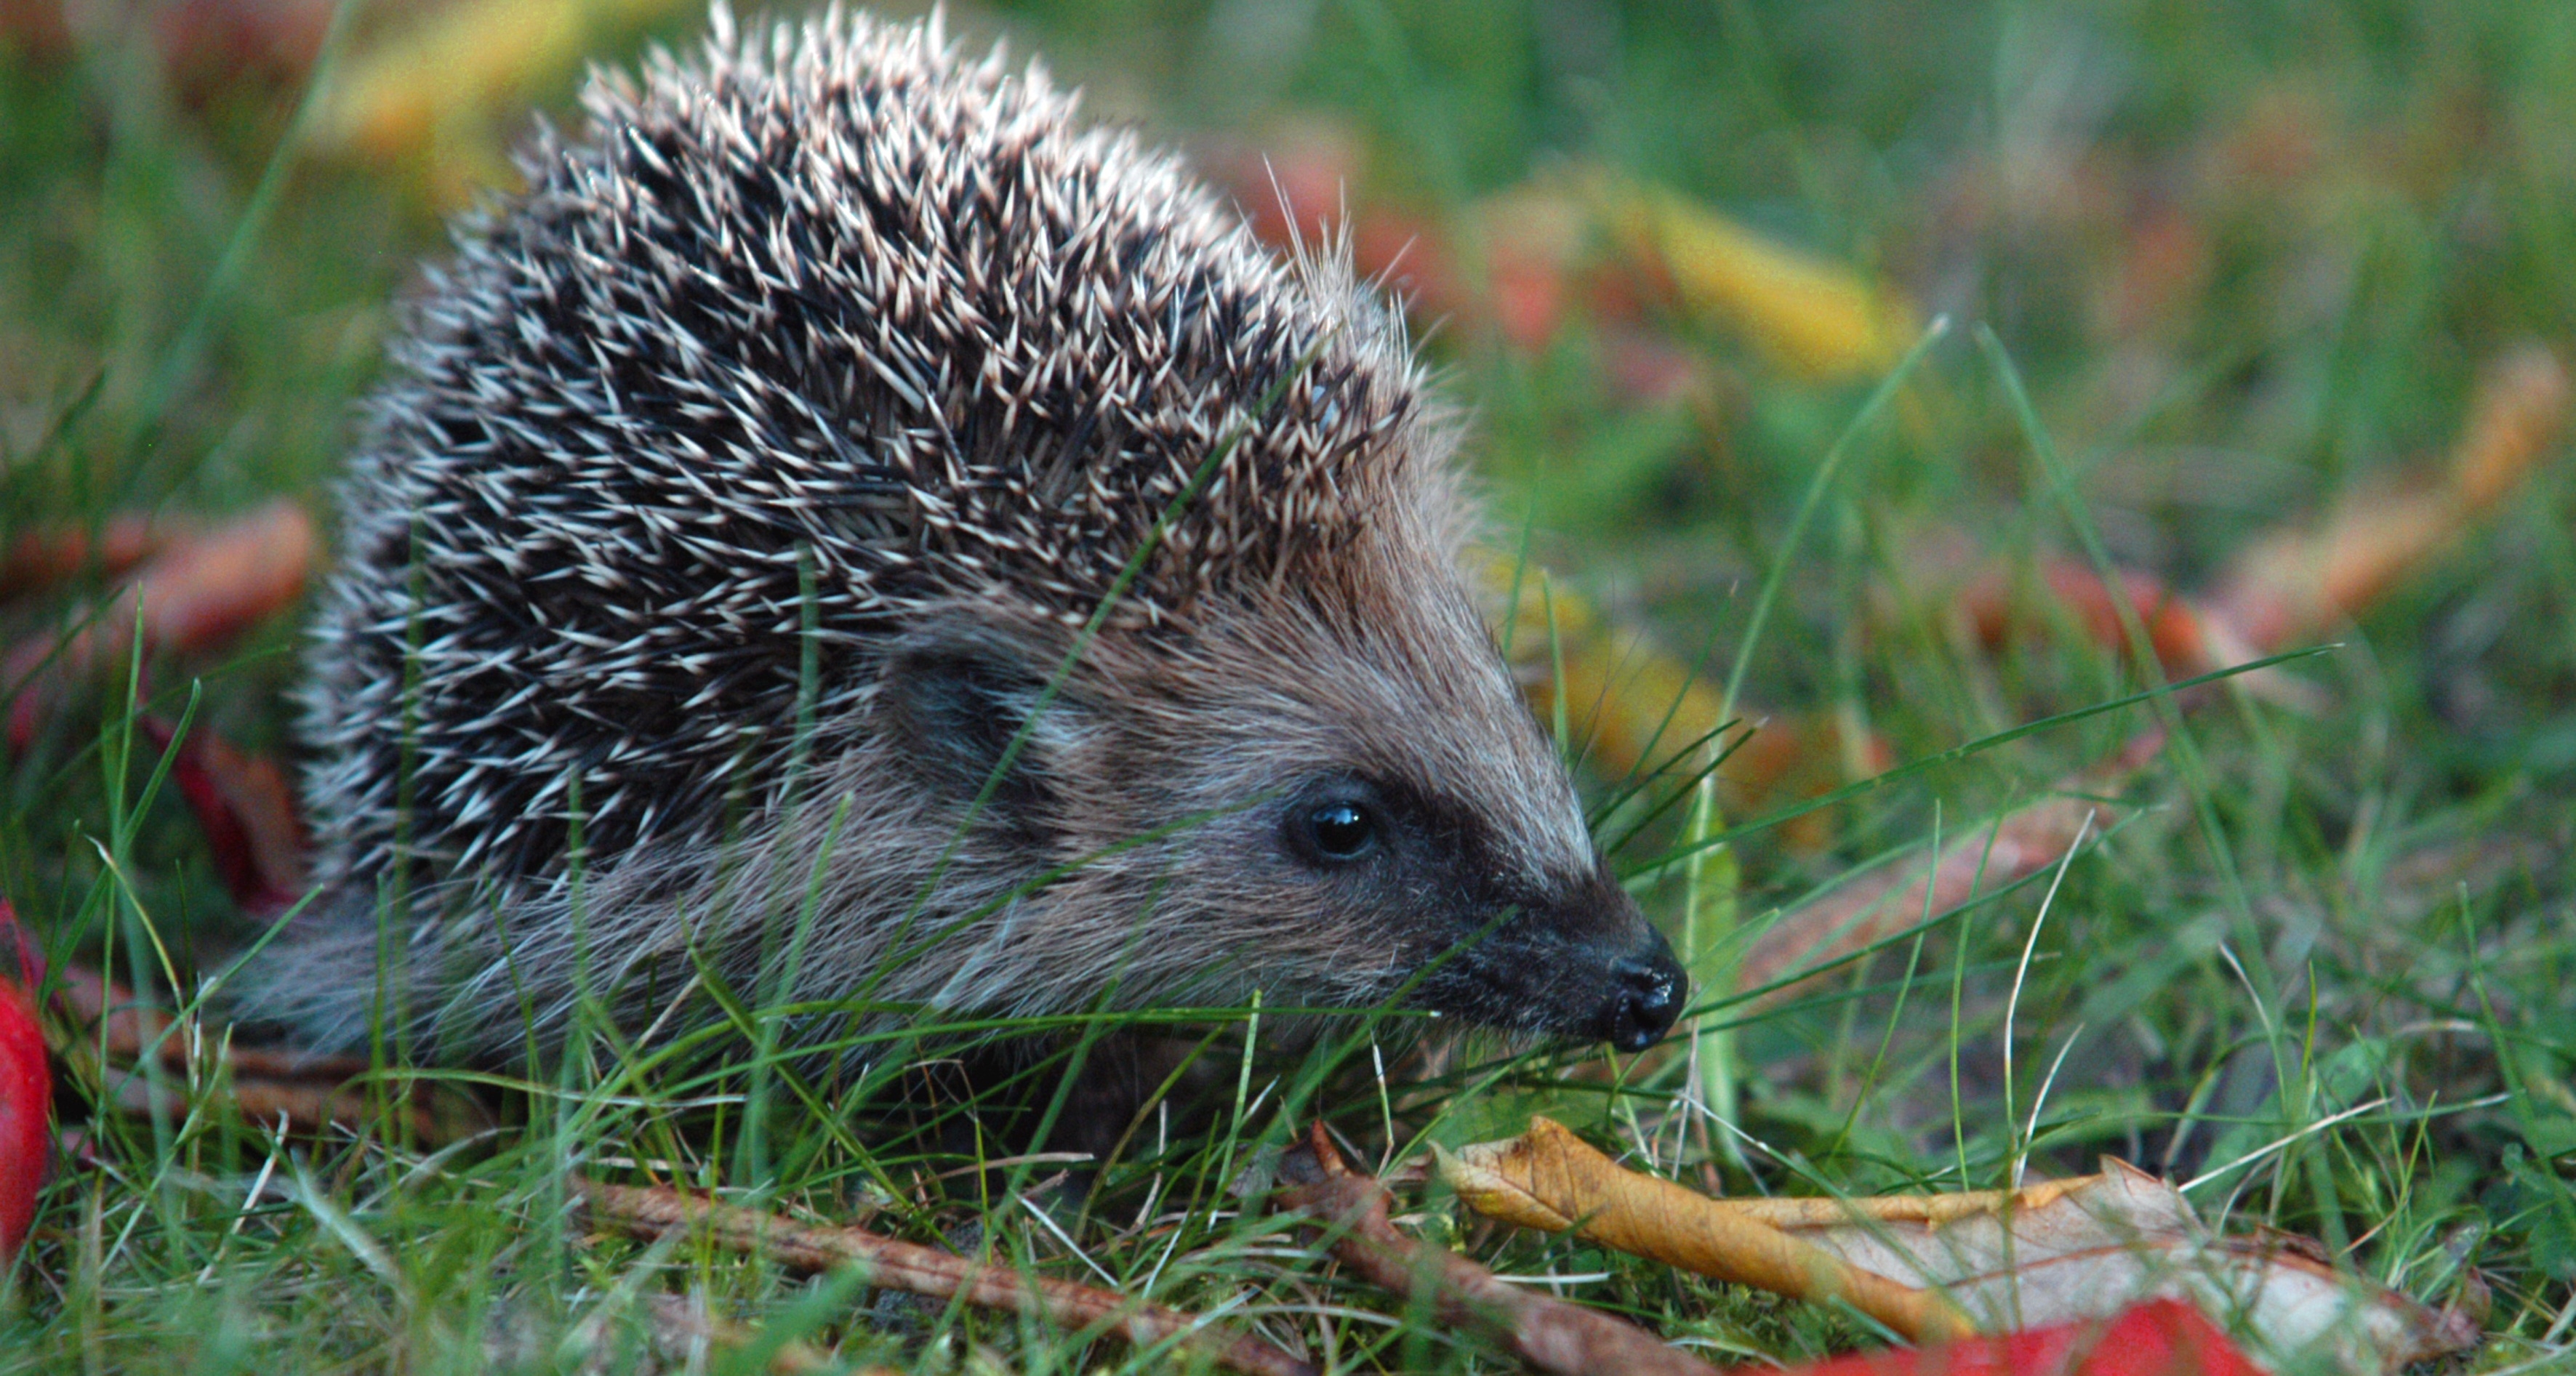 A hedgehog crawls through the grass with fall leaves